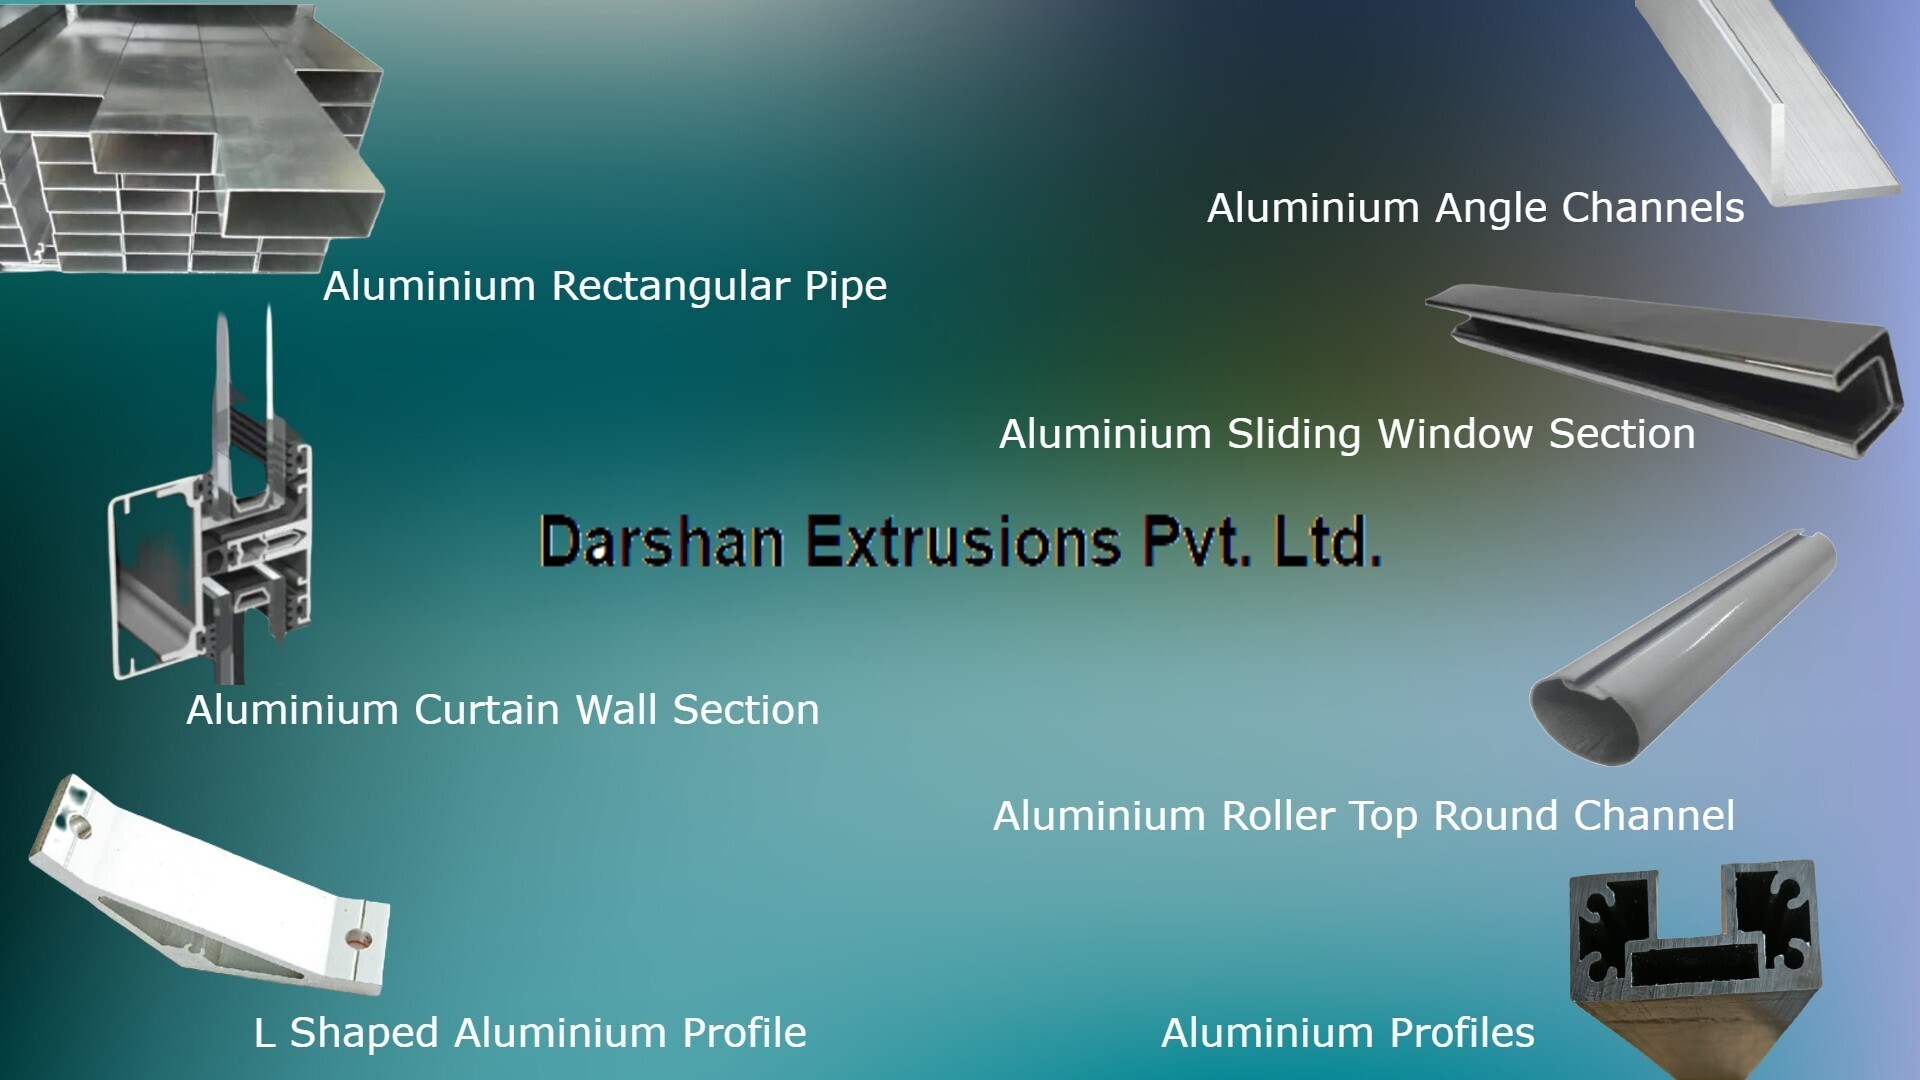 Darshan Extrusions Pvt. Ltd. joins AL Biz as an esteemed aluminium profiles manufacturer